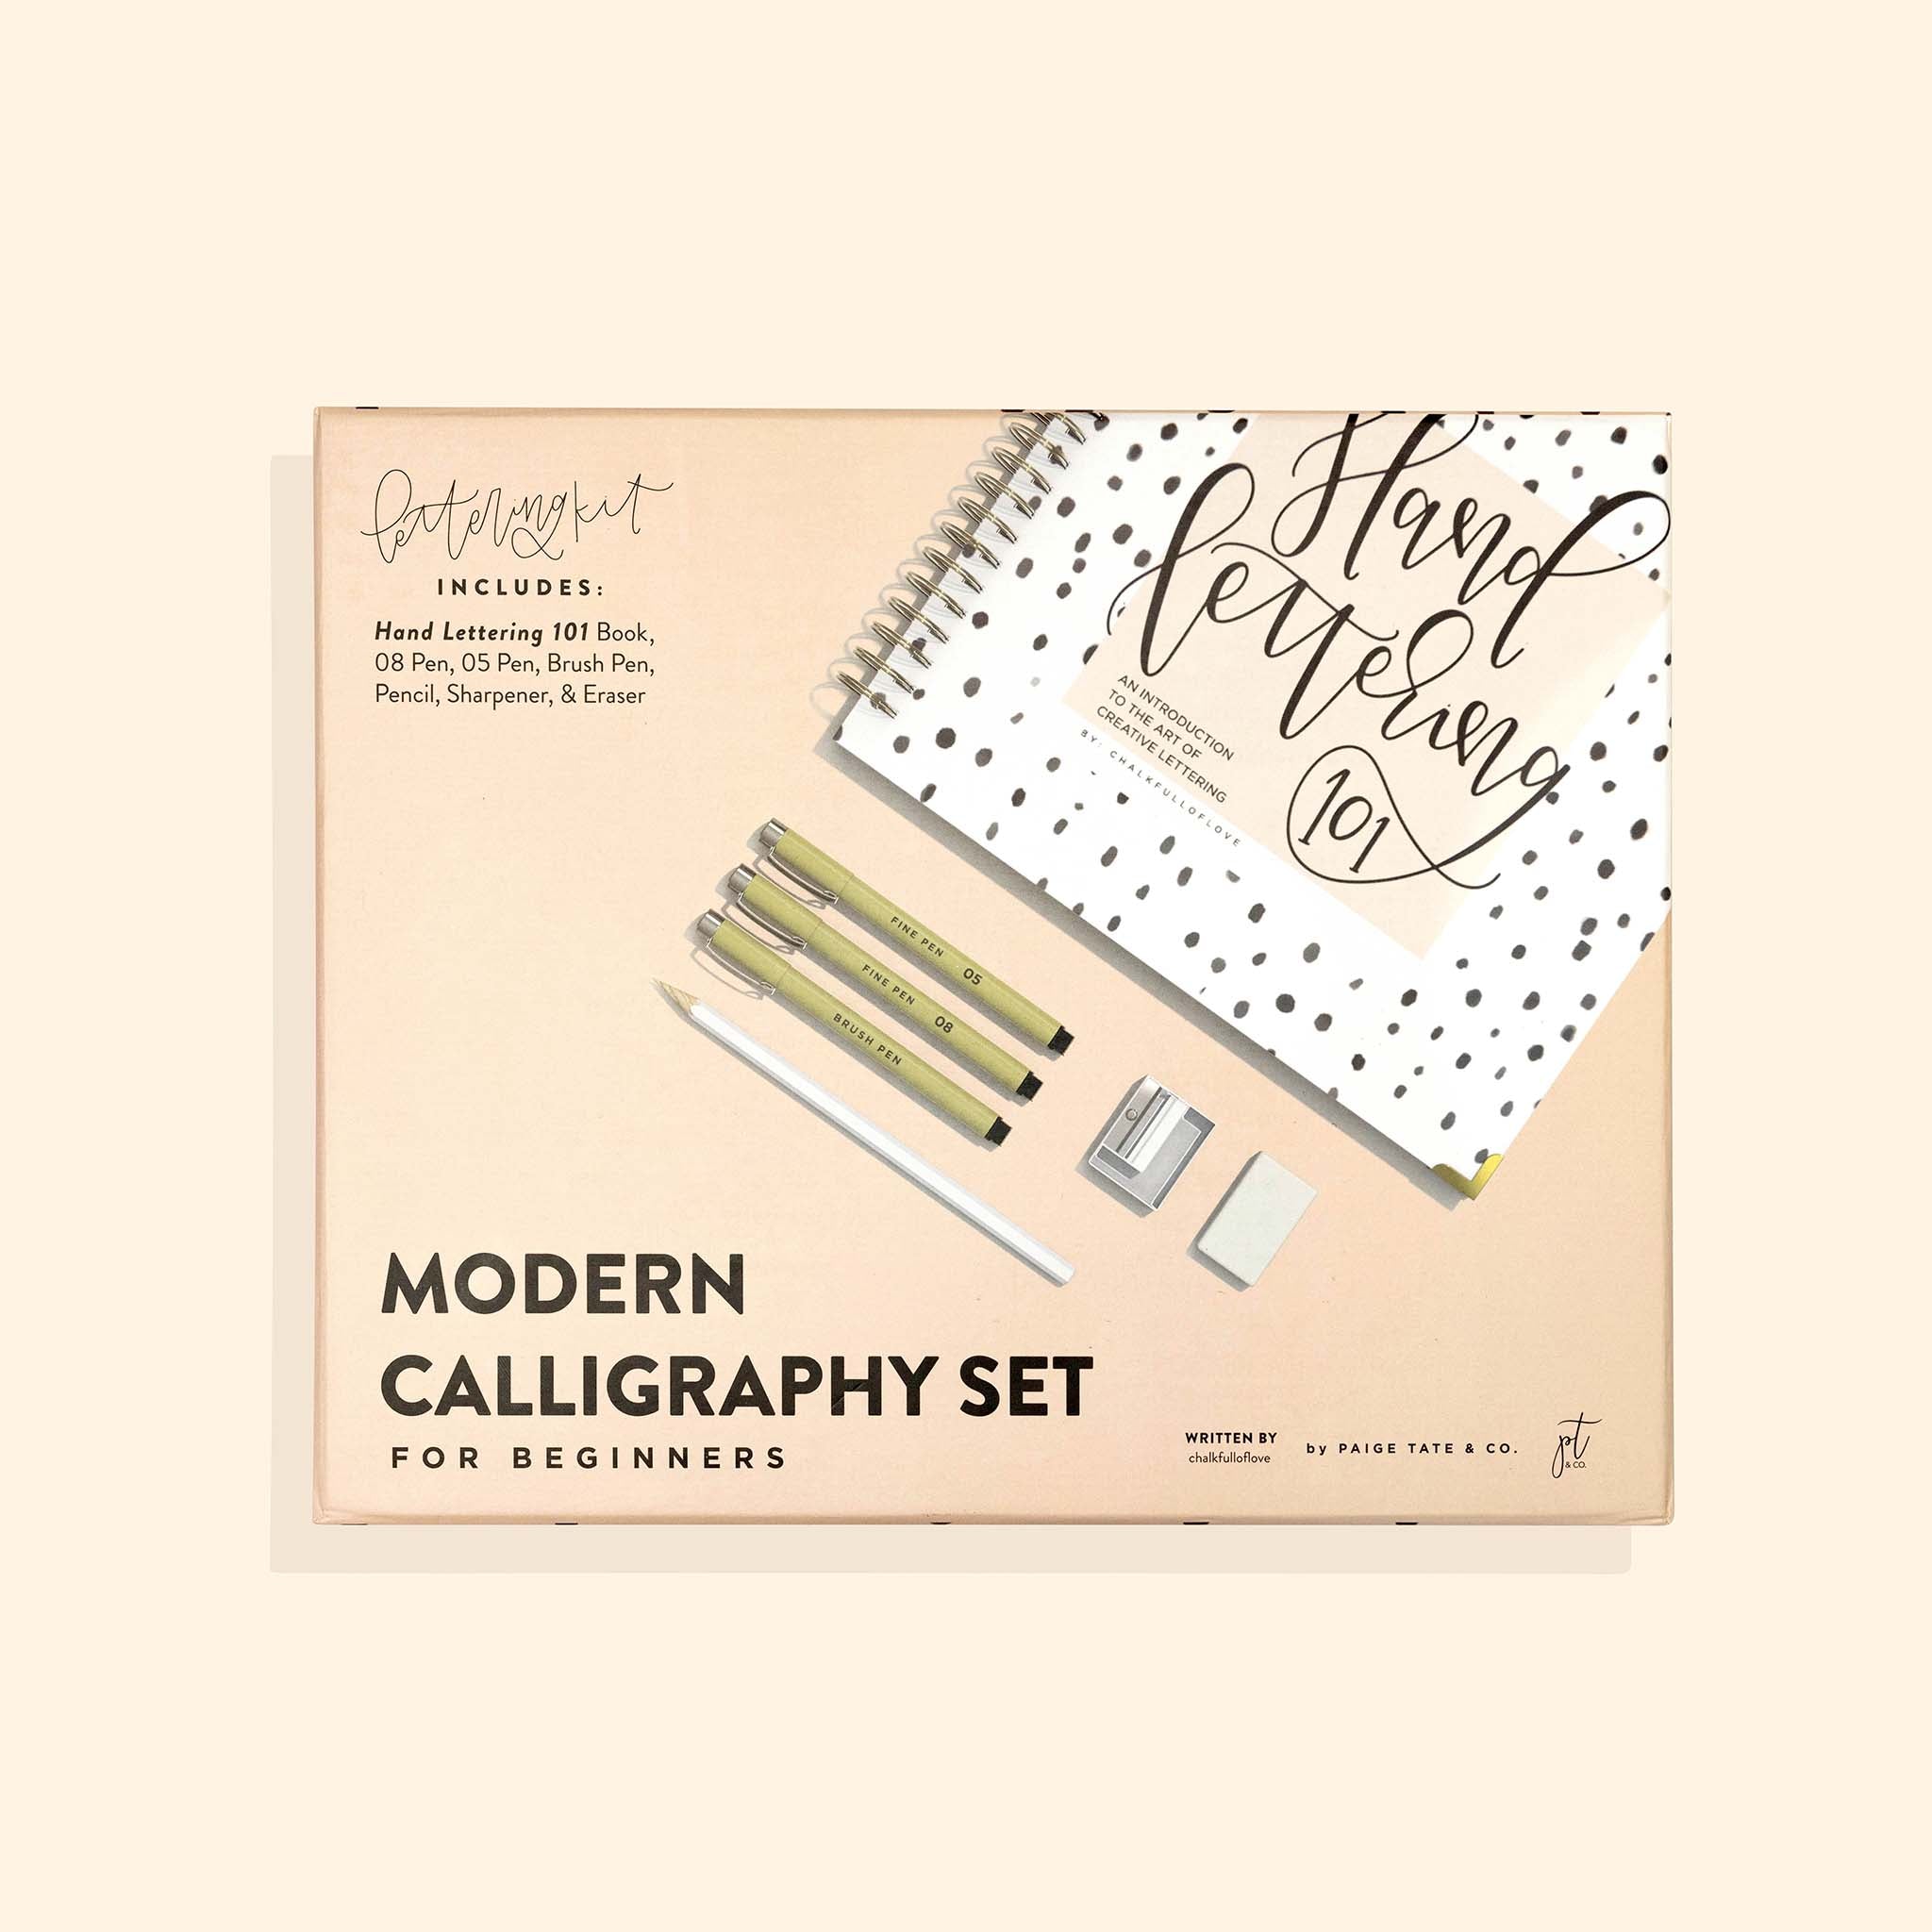 Modern Calligraphy Set for Beginners - The Best Kit for Beginners